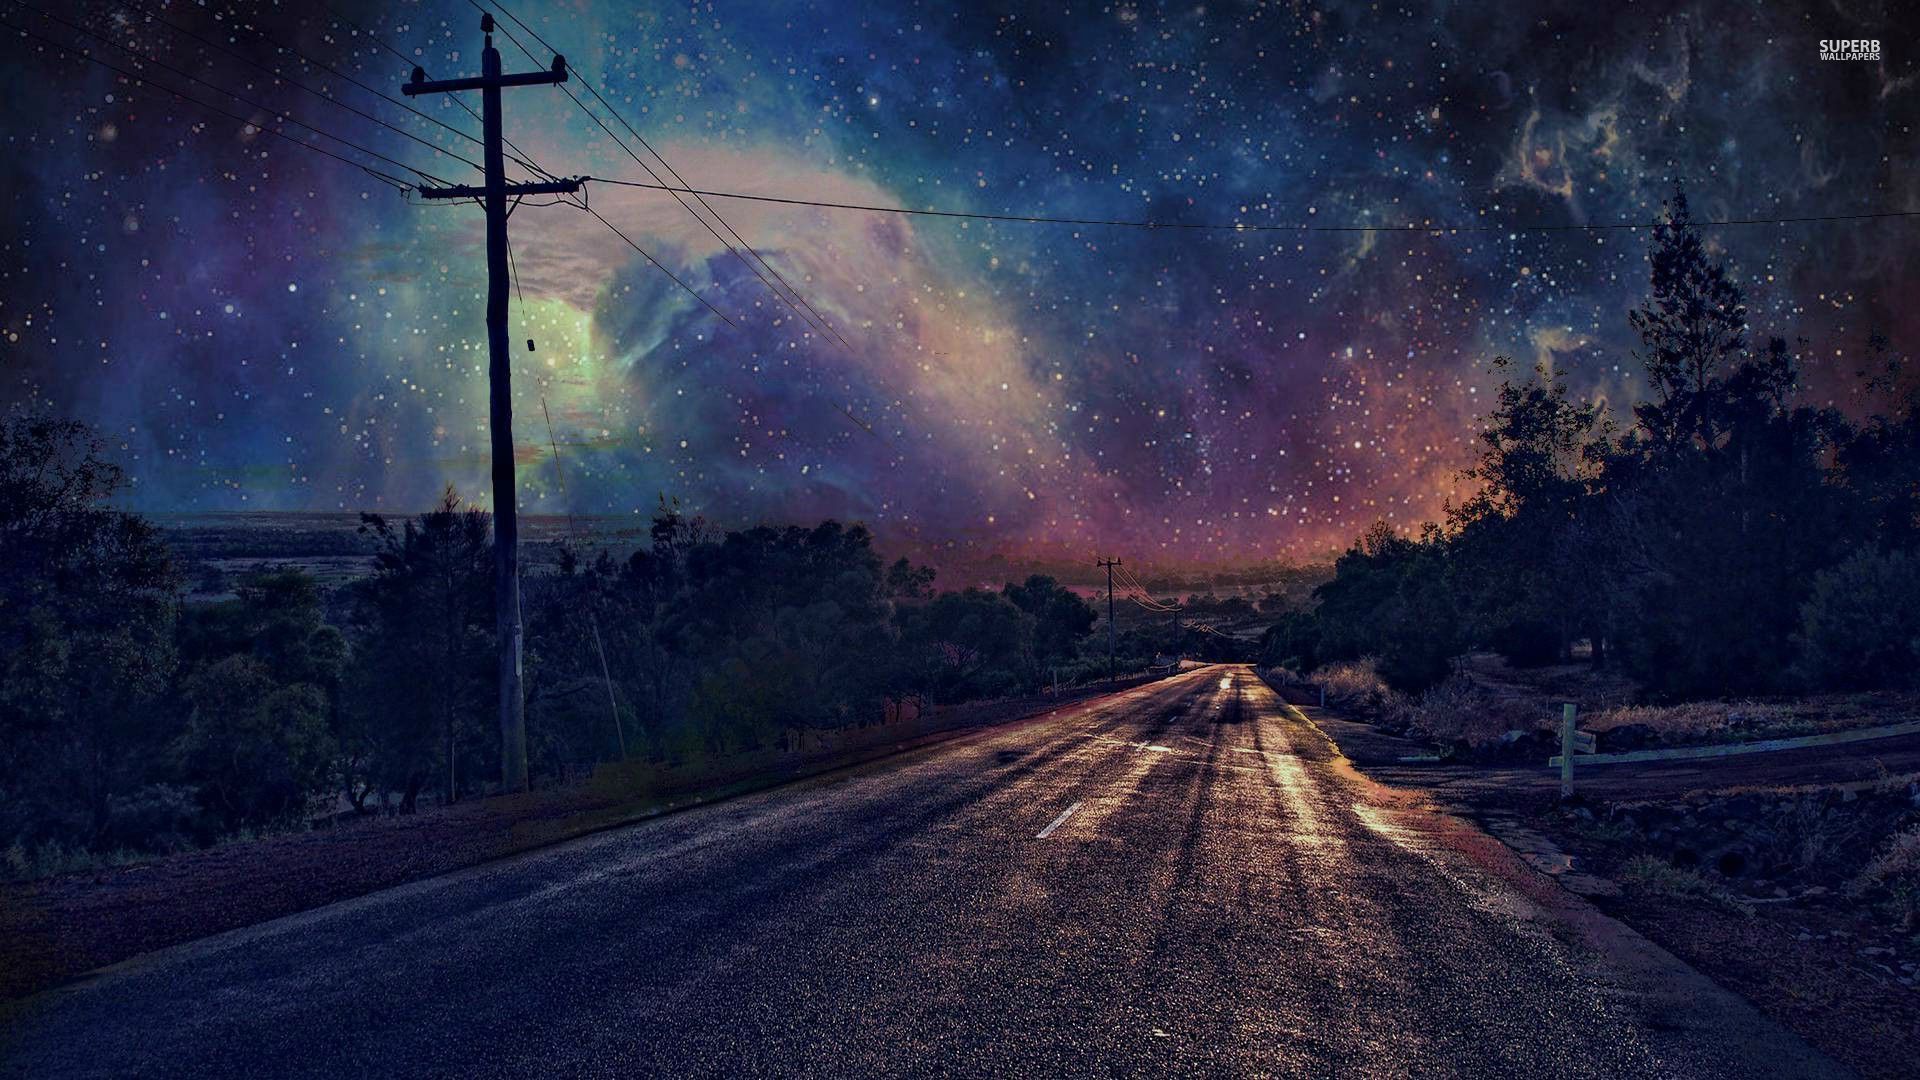 Nebula covered night sky wallpaper - Digital Art wallpapers - #29302